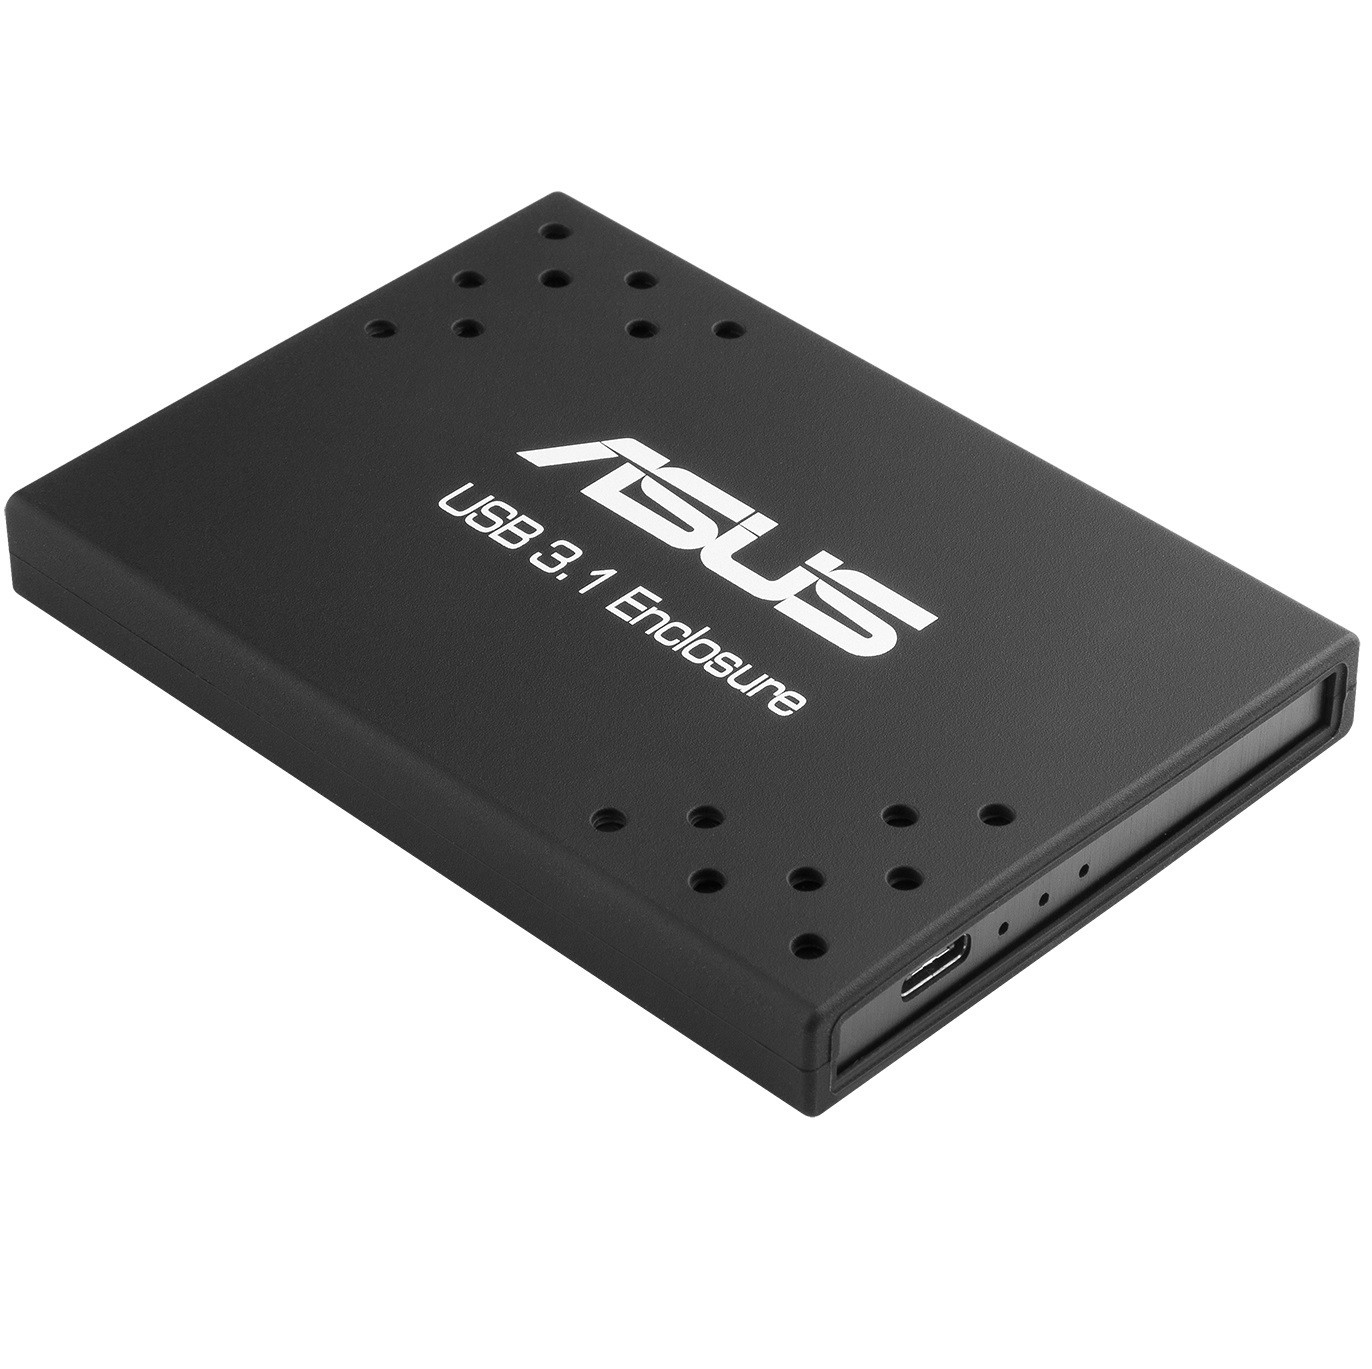 Ssd накопители asus. Внешний SSD ASUS USB 3.1 Enclosure 512gb 512 ГБ.